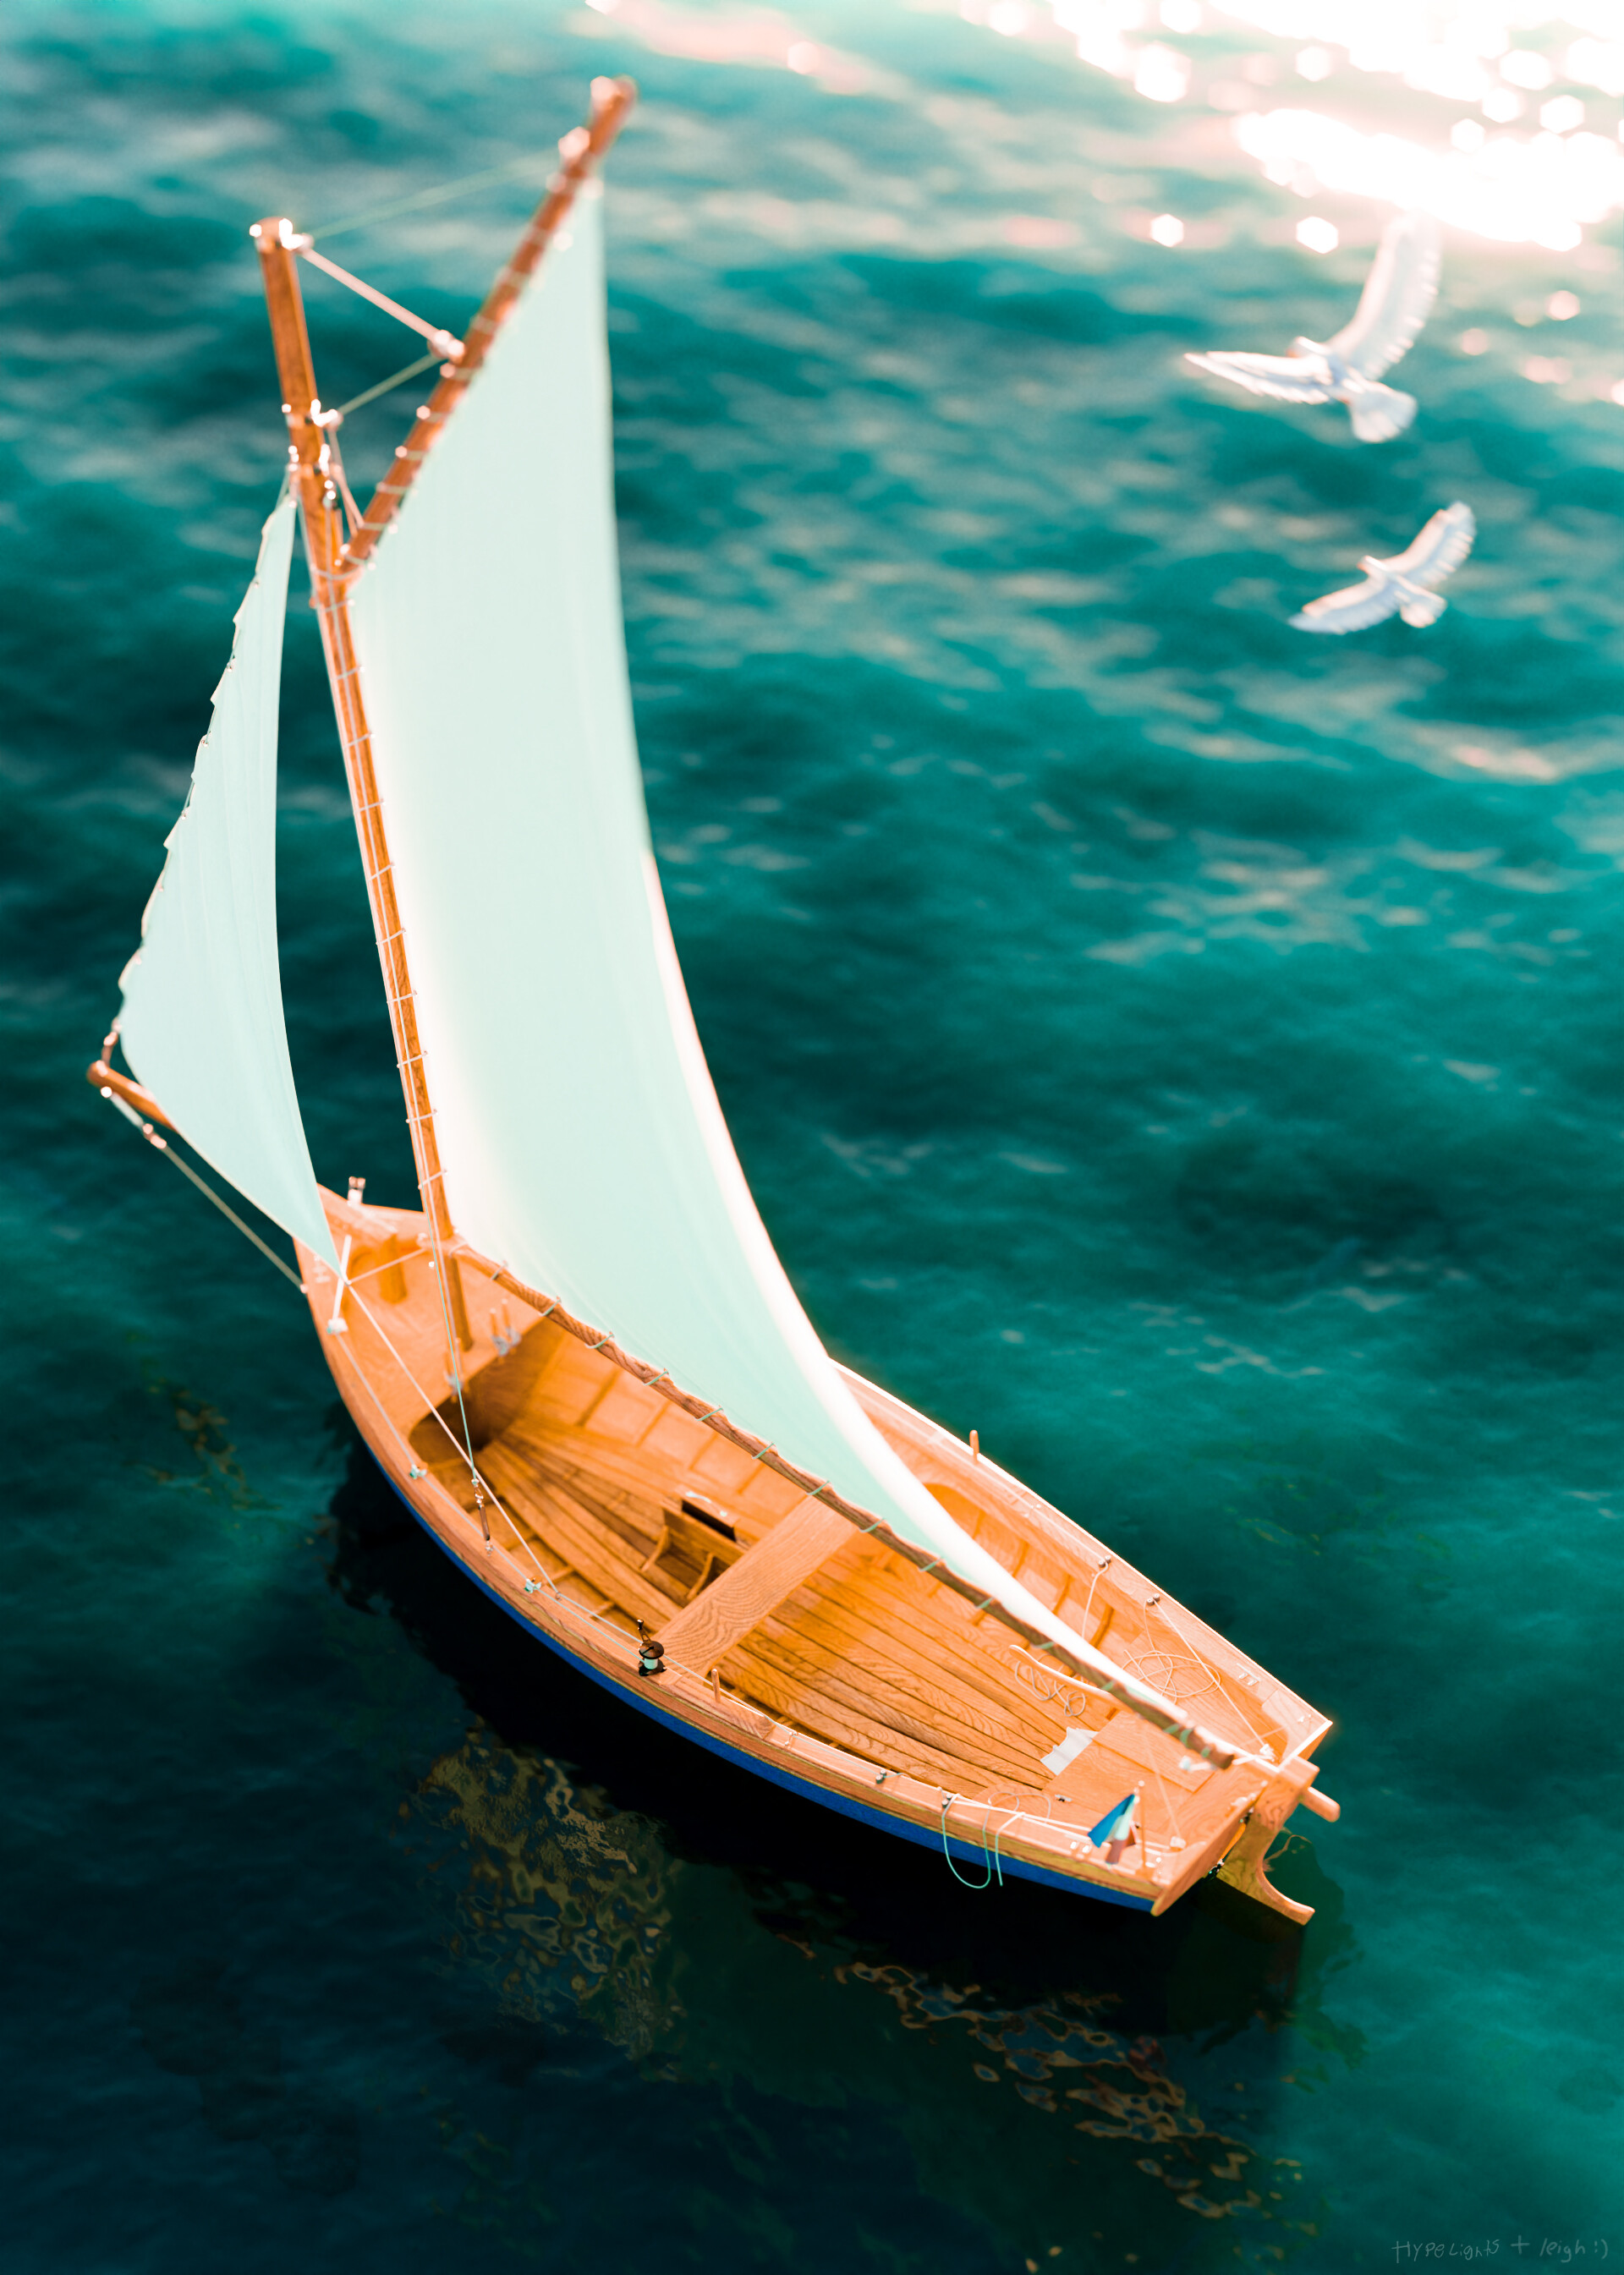 blender free sailboat model